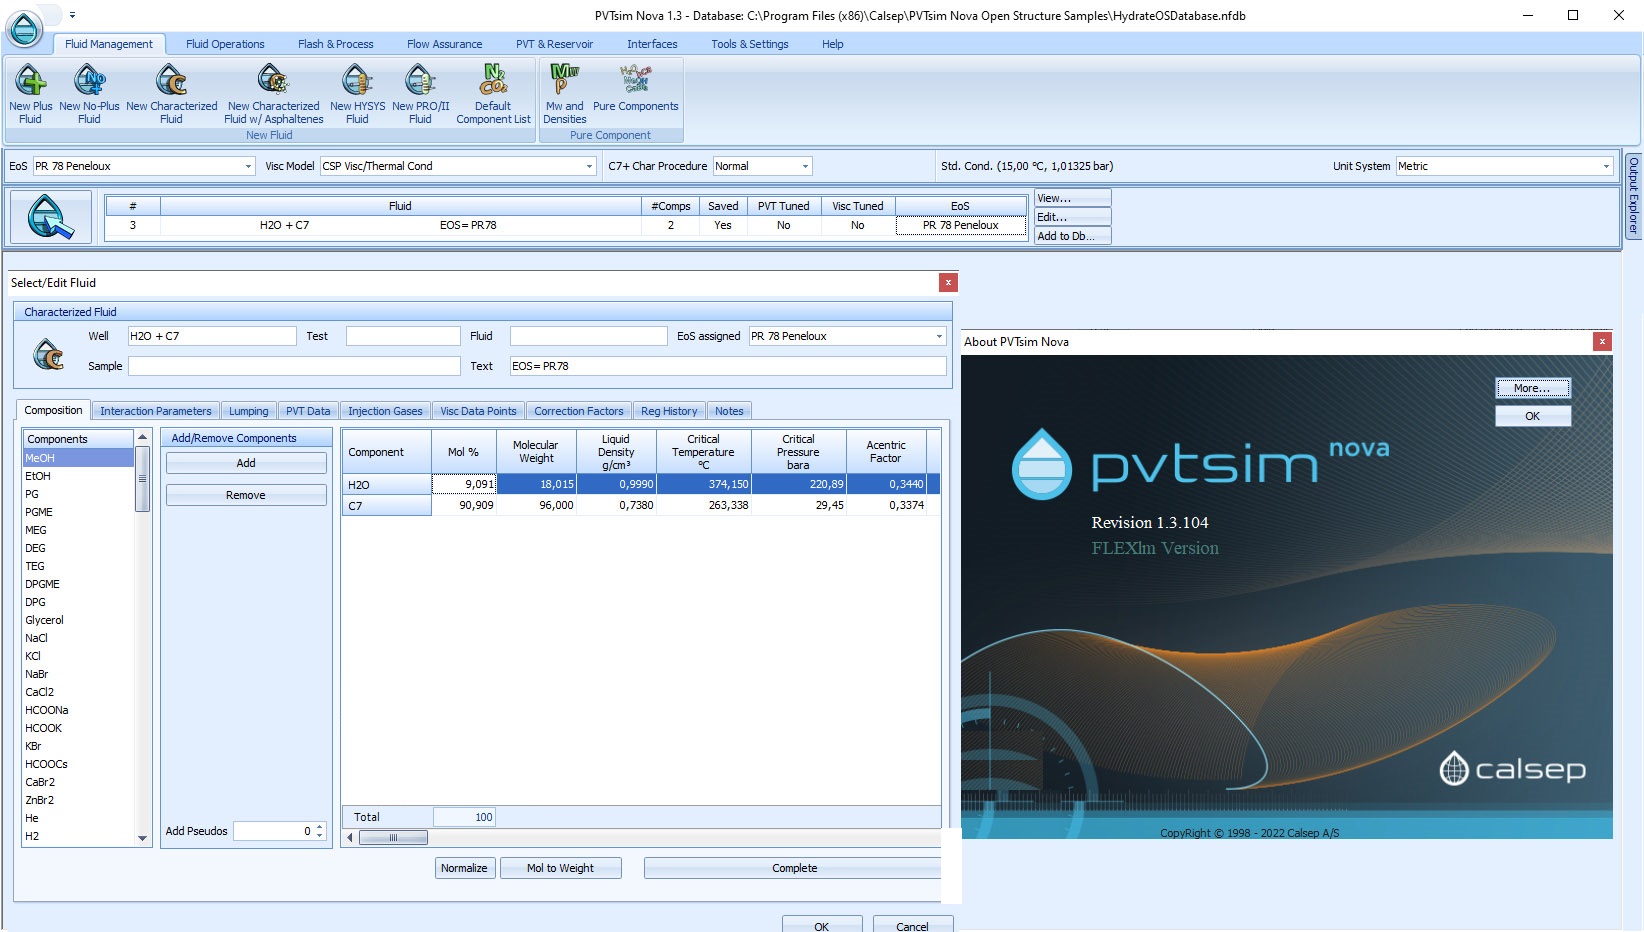 Working with Calsep PVTsim Nova 1.3.104 full